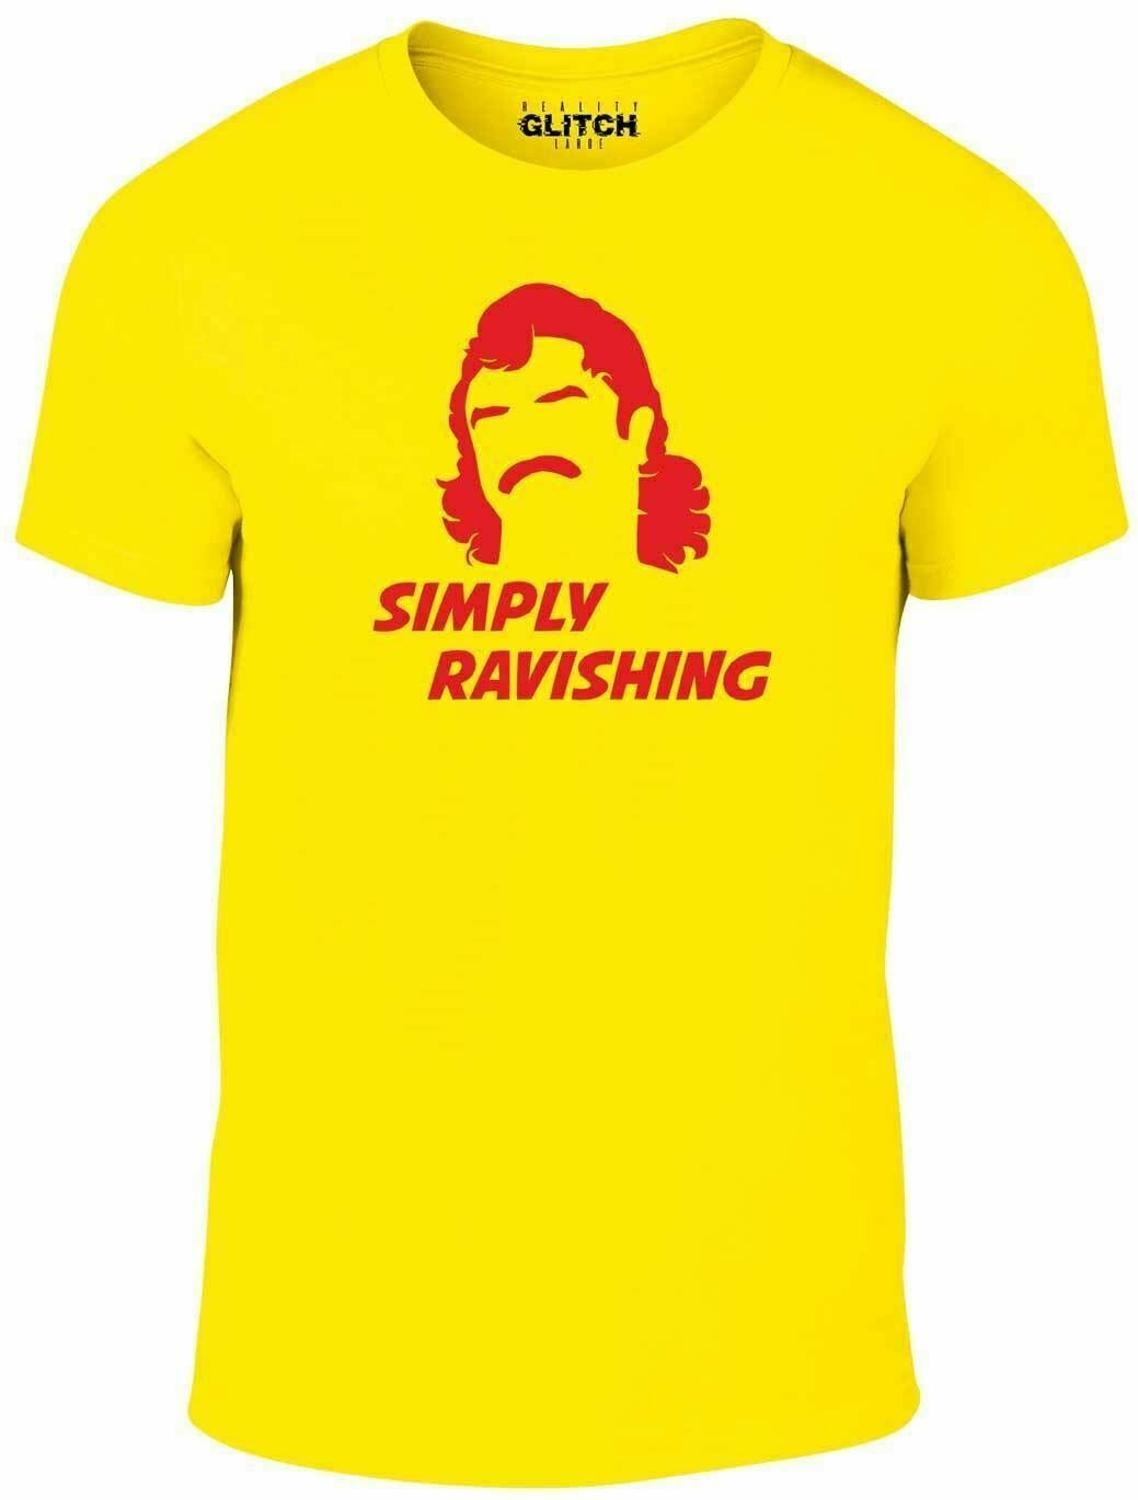 Simply Ravishing T Shirt - Funny T-Shirt Wrestling Rick Rude Comic Cool Wwe 2019 Fashion High Quality Men Tops T Shirt